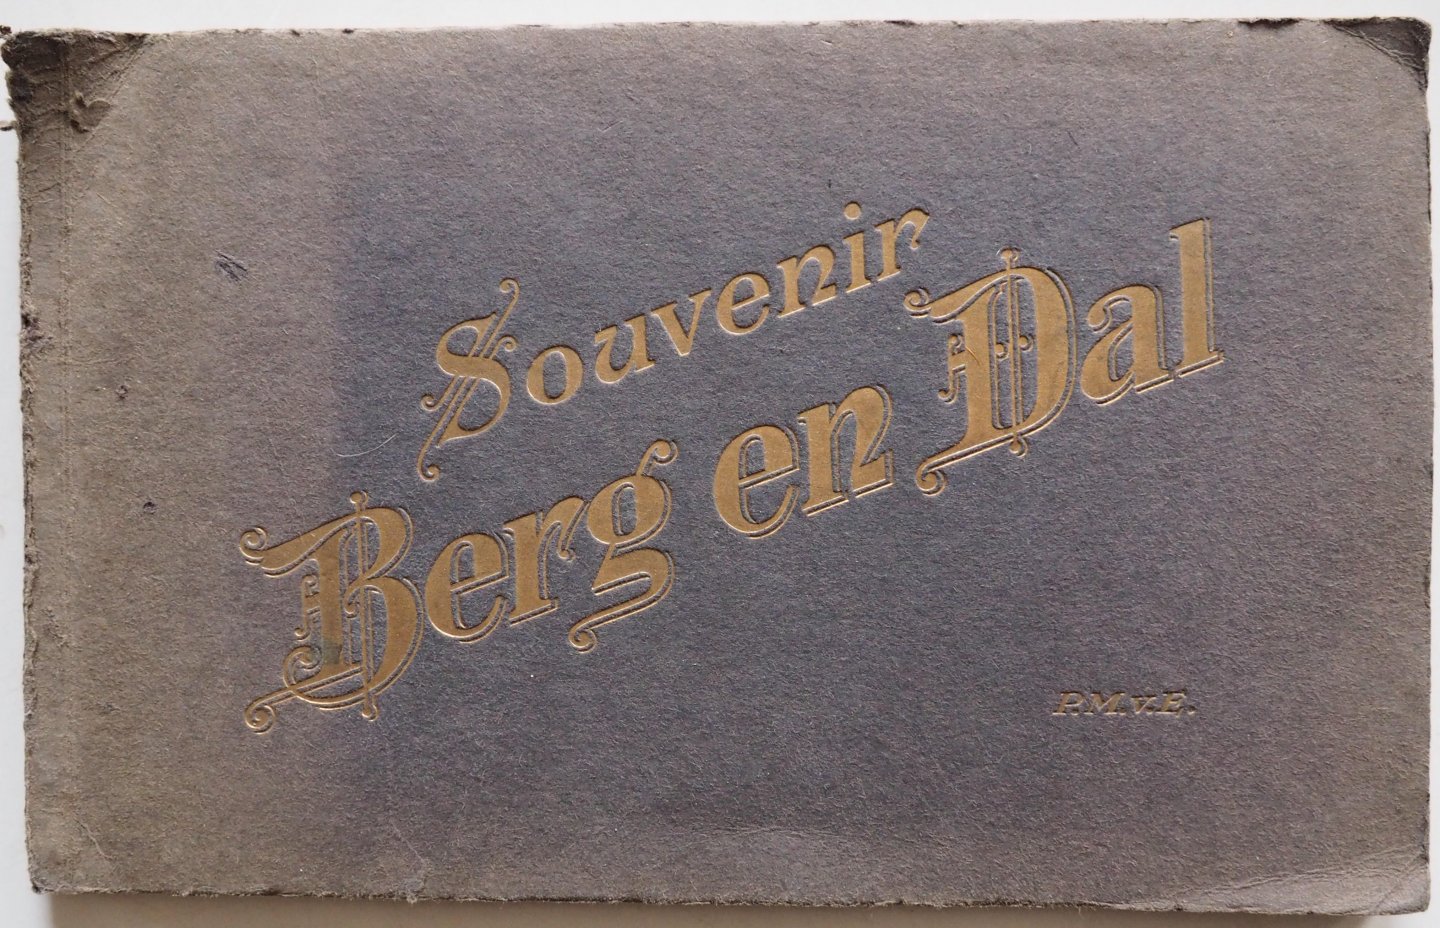 P.M. v. E. - Souvenir Berg en Dal 12 foto's O.a. Gezicht op Hotel Groot, Bergspoor van Beek naar Berg en Dal, Weg naar Mooi Nederland